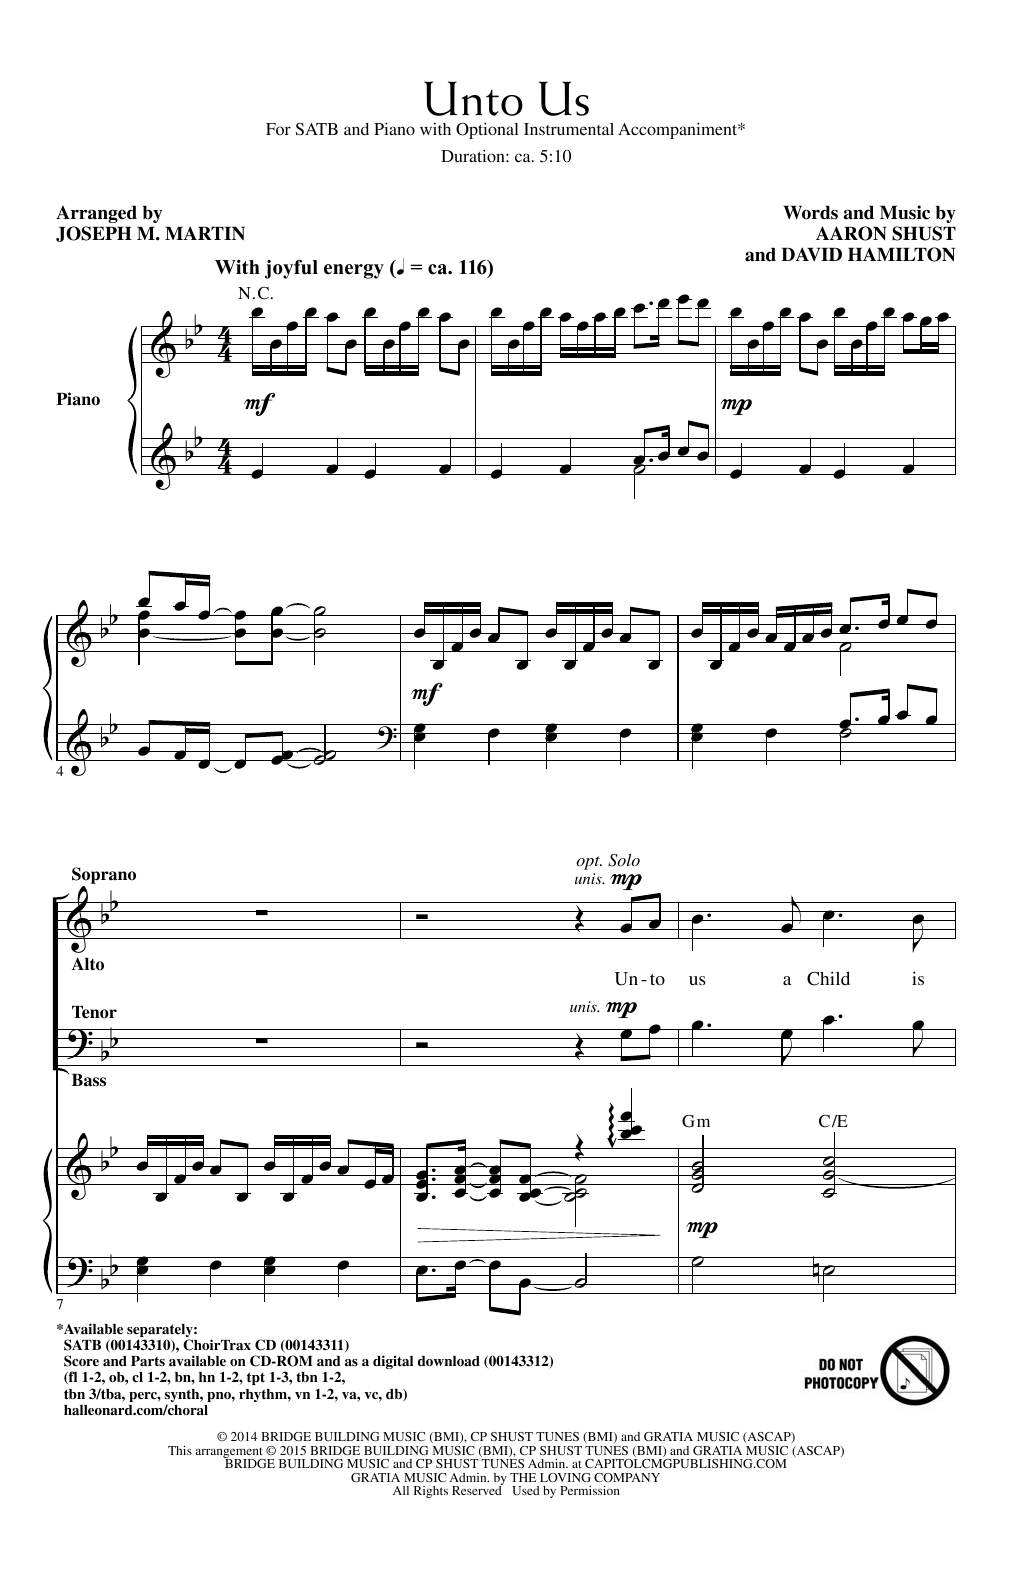 Joseph M. Martin Unto Us Sheet Music Notes & Chords for SATB - Download or Print PDF